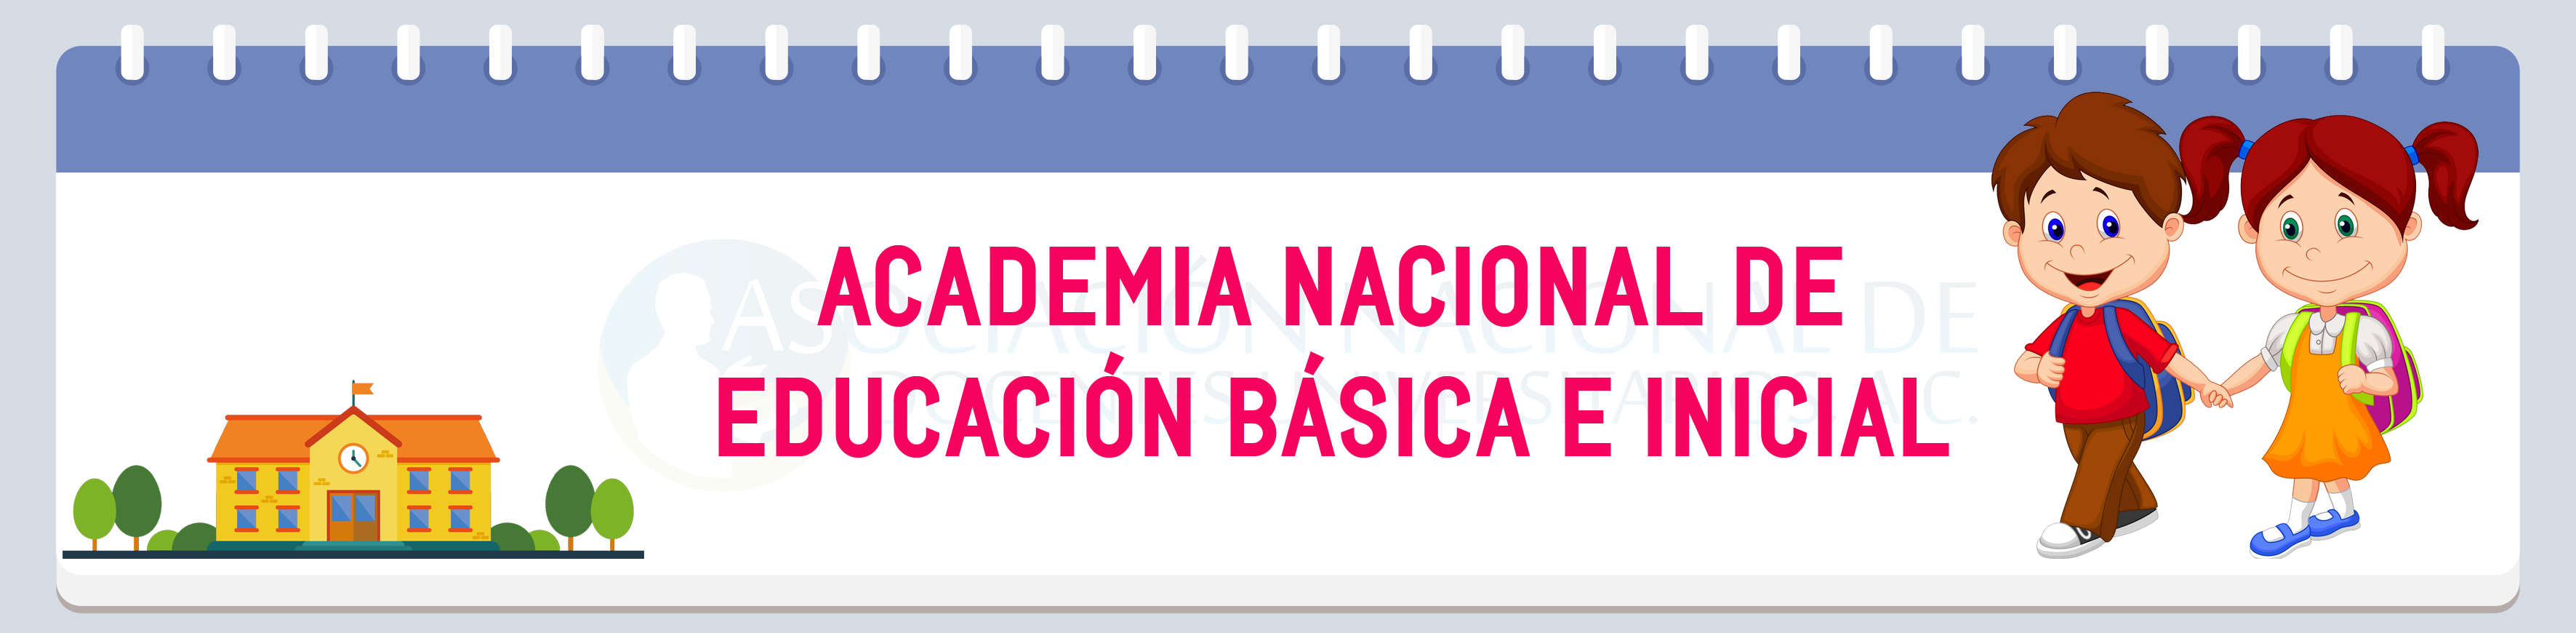 academia_educacion_basica_inicial.png